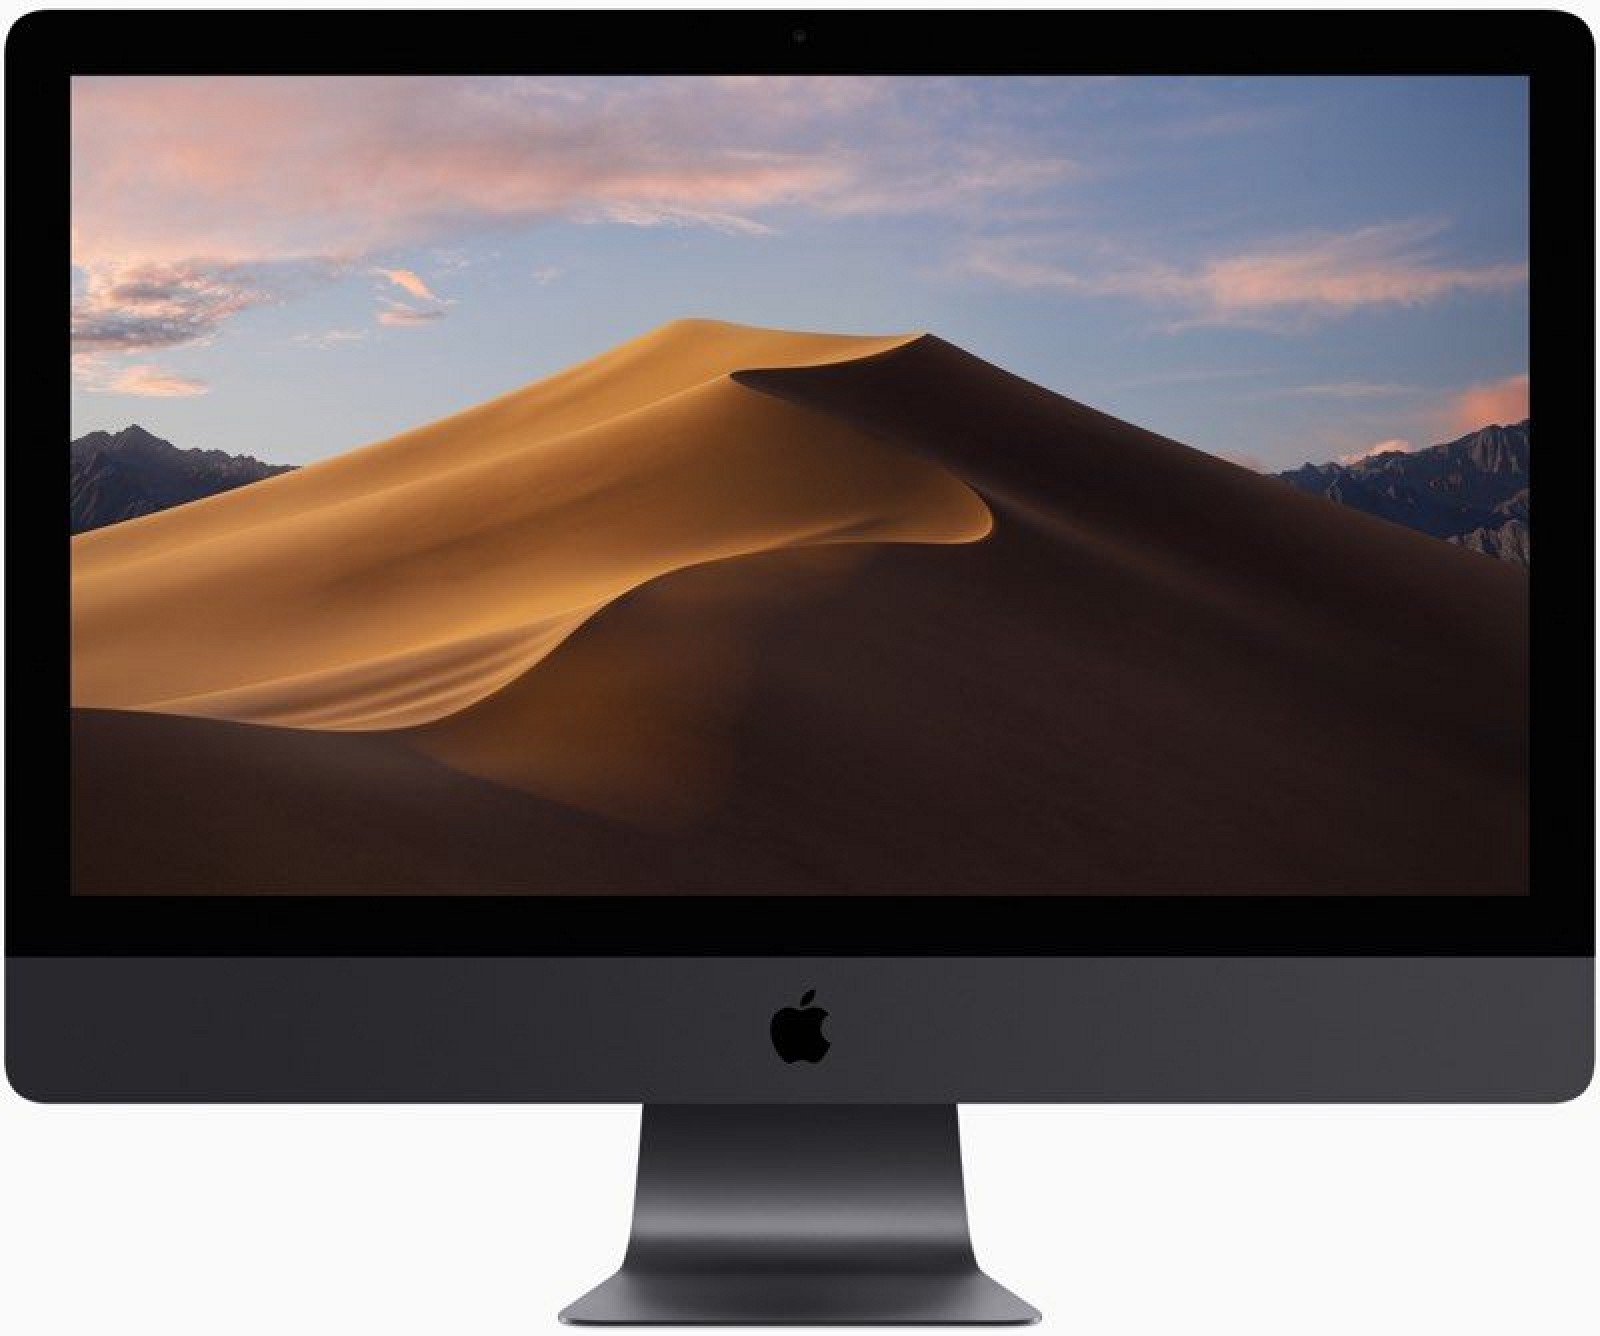 Mojave Update For Older Mac